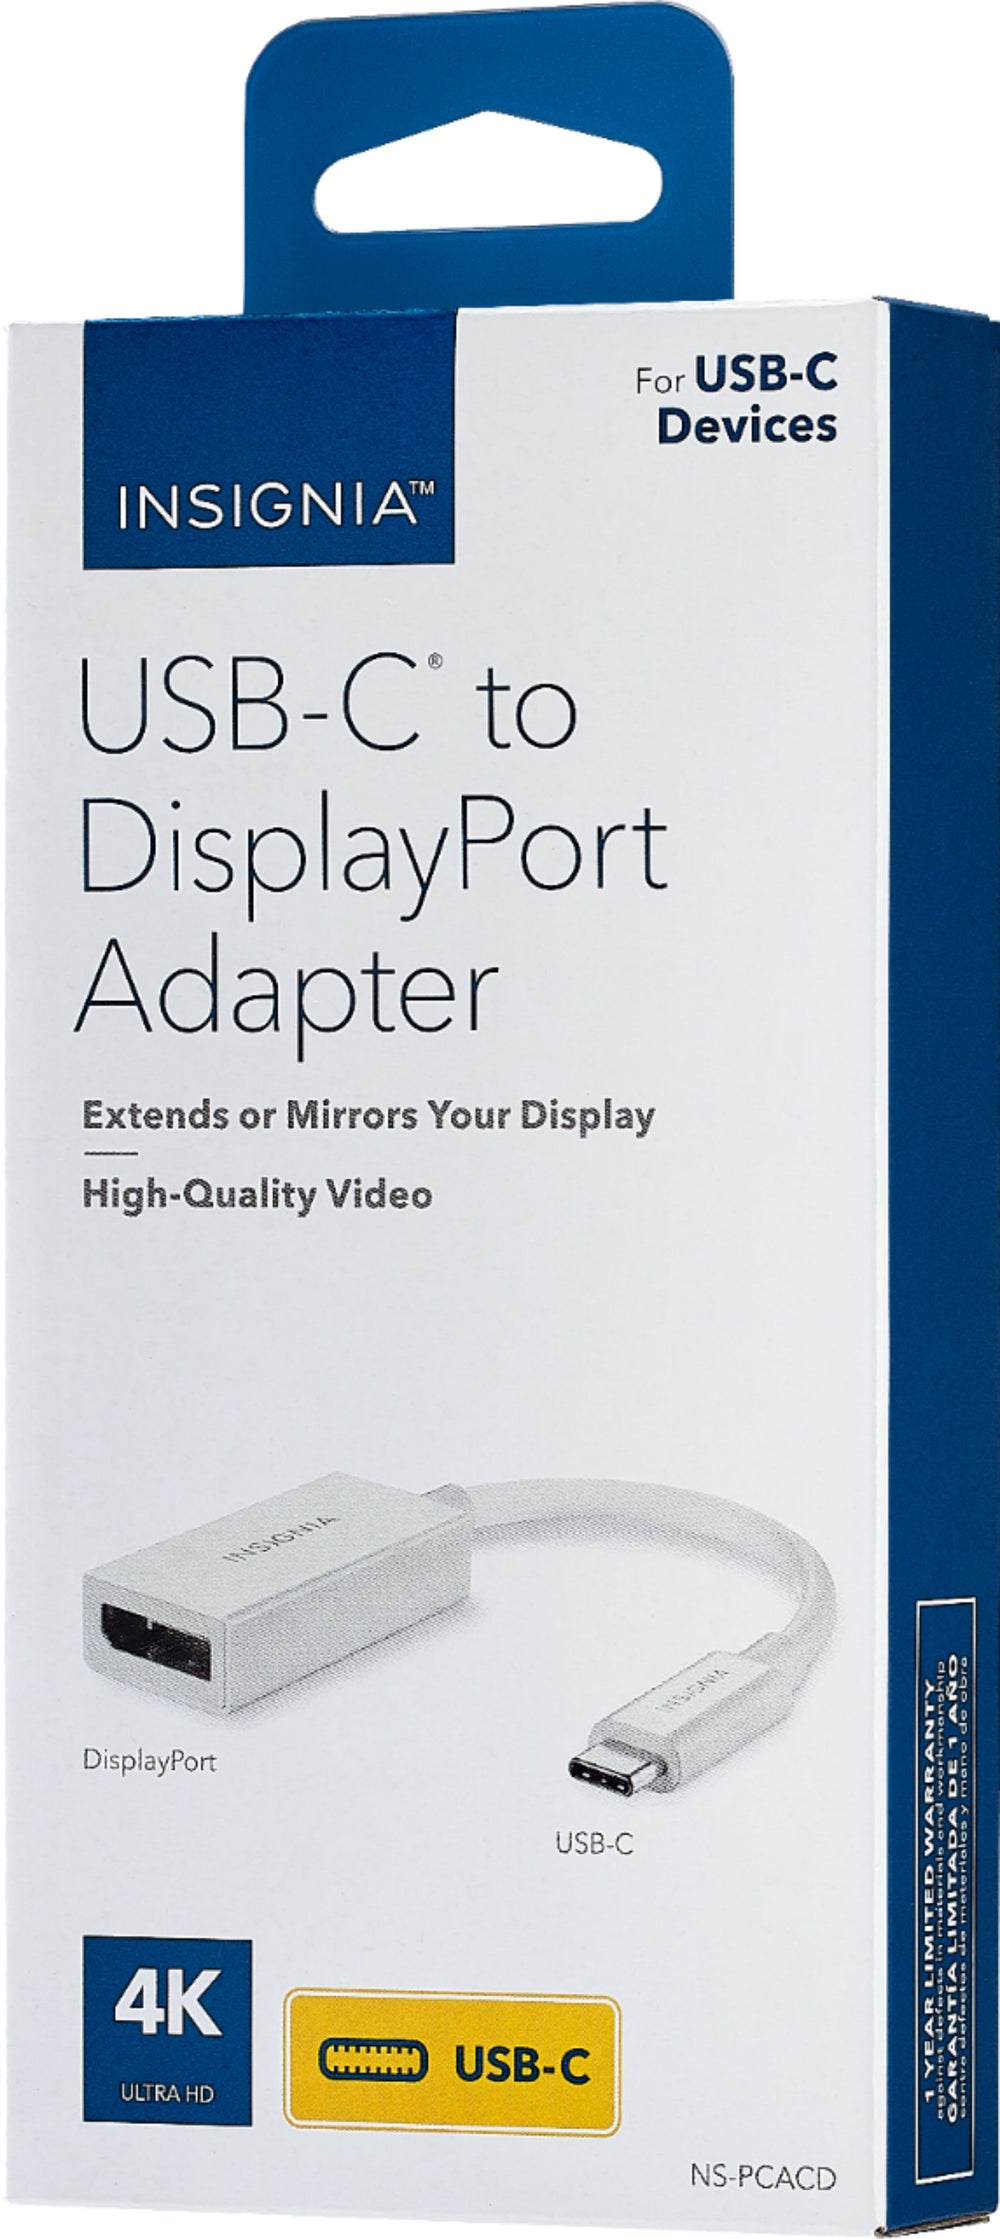 Insignia™ - USB-C to DisplayPort Adapter - White_1